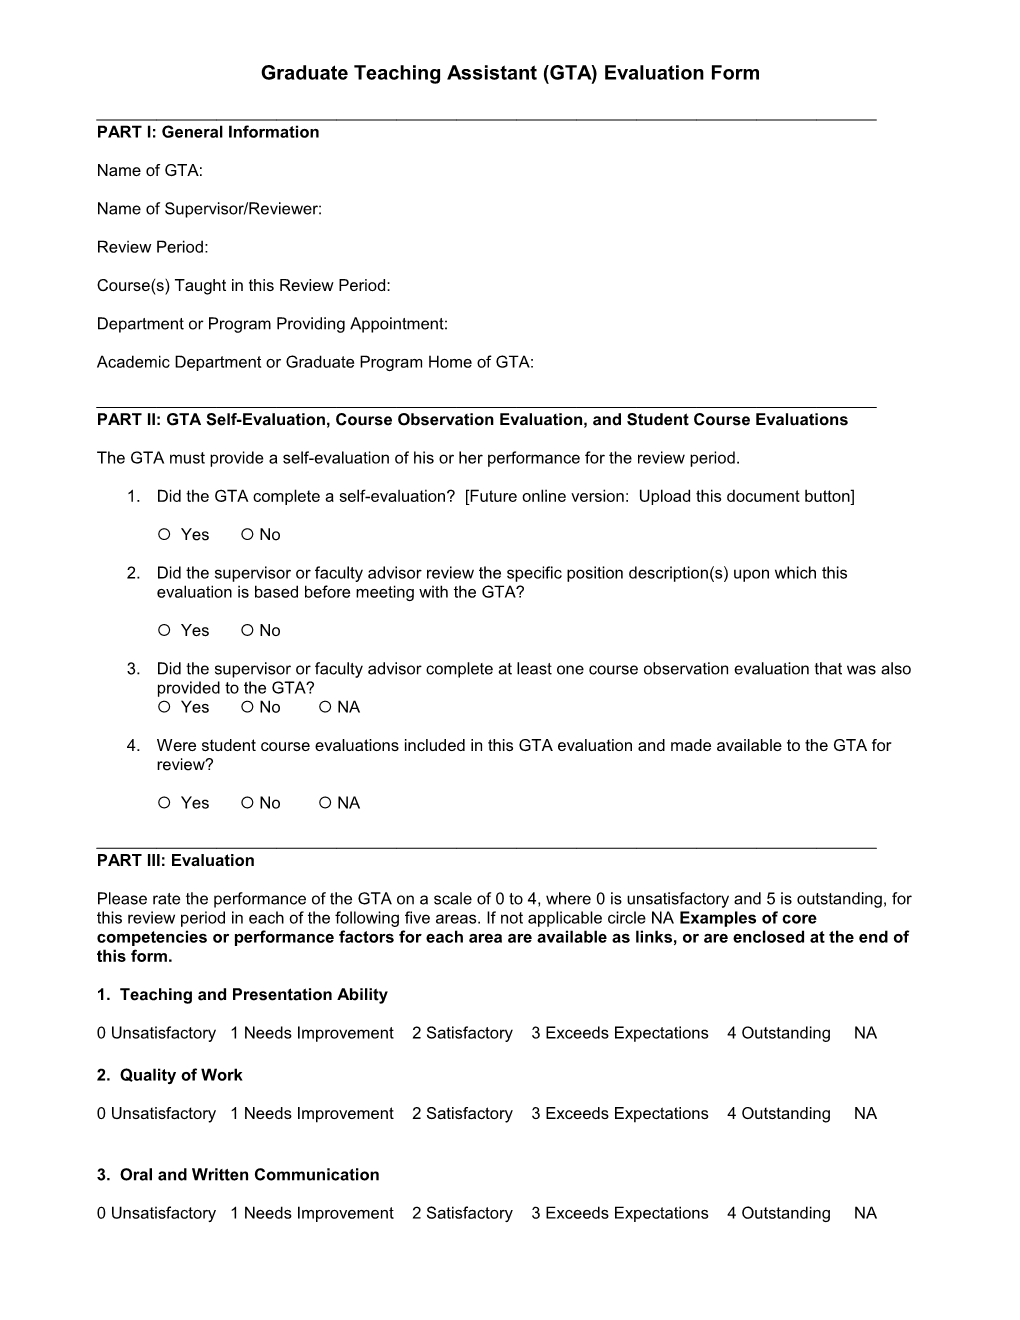 Graduate Teaching Assistant (GTA) Evaluation Form